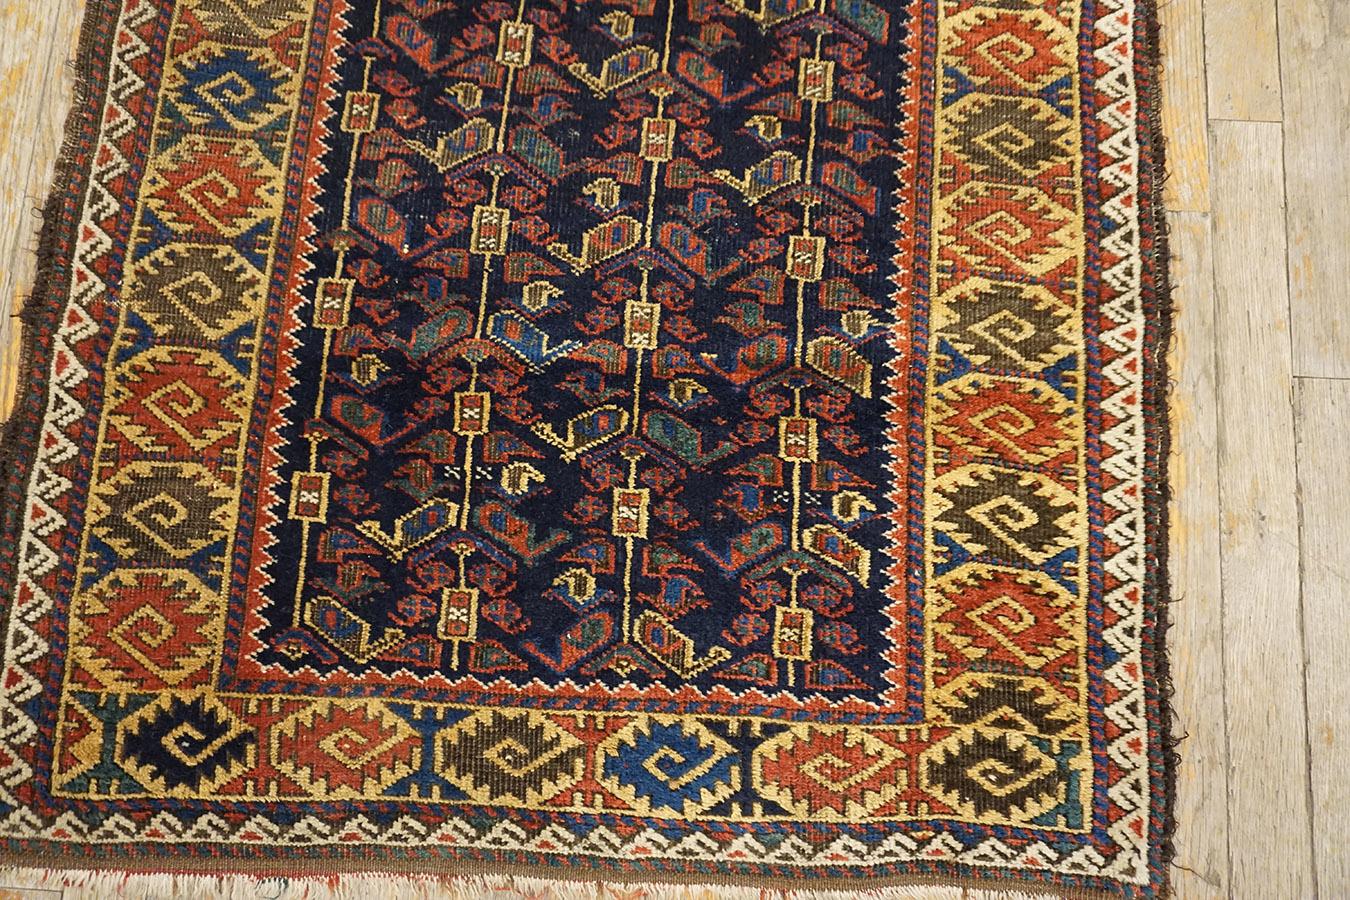 Late 119th Century Persian ( Arab ) Baluch Carpet ( 2'10